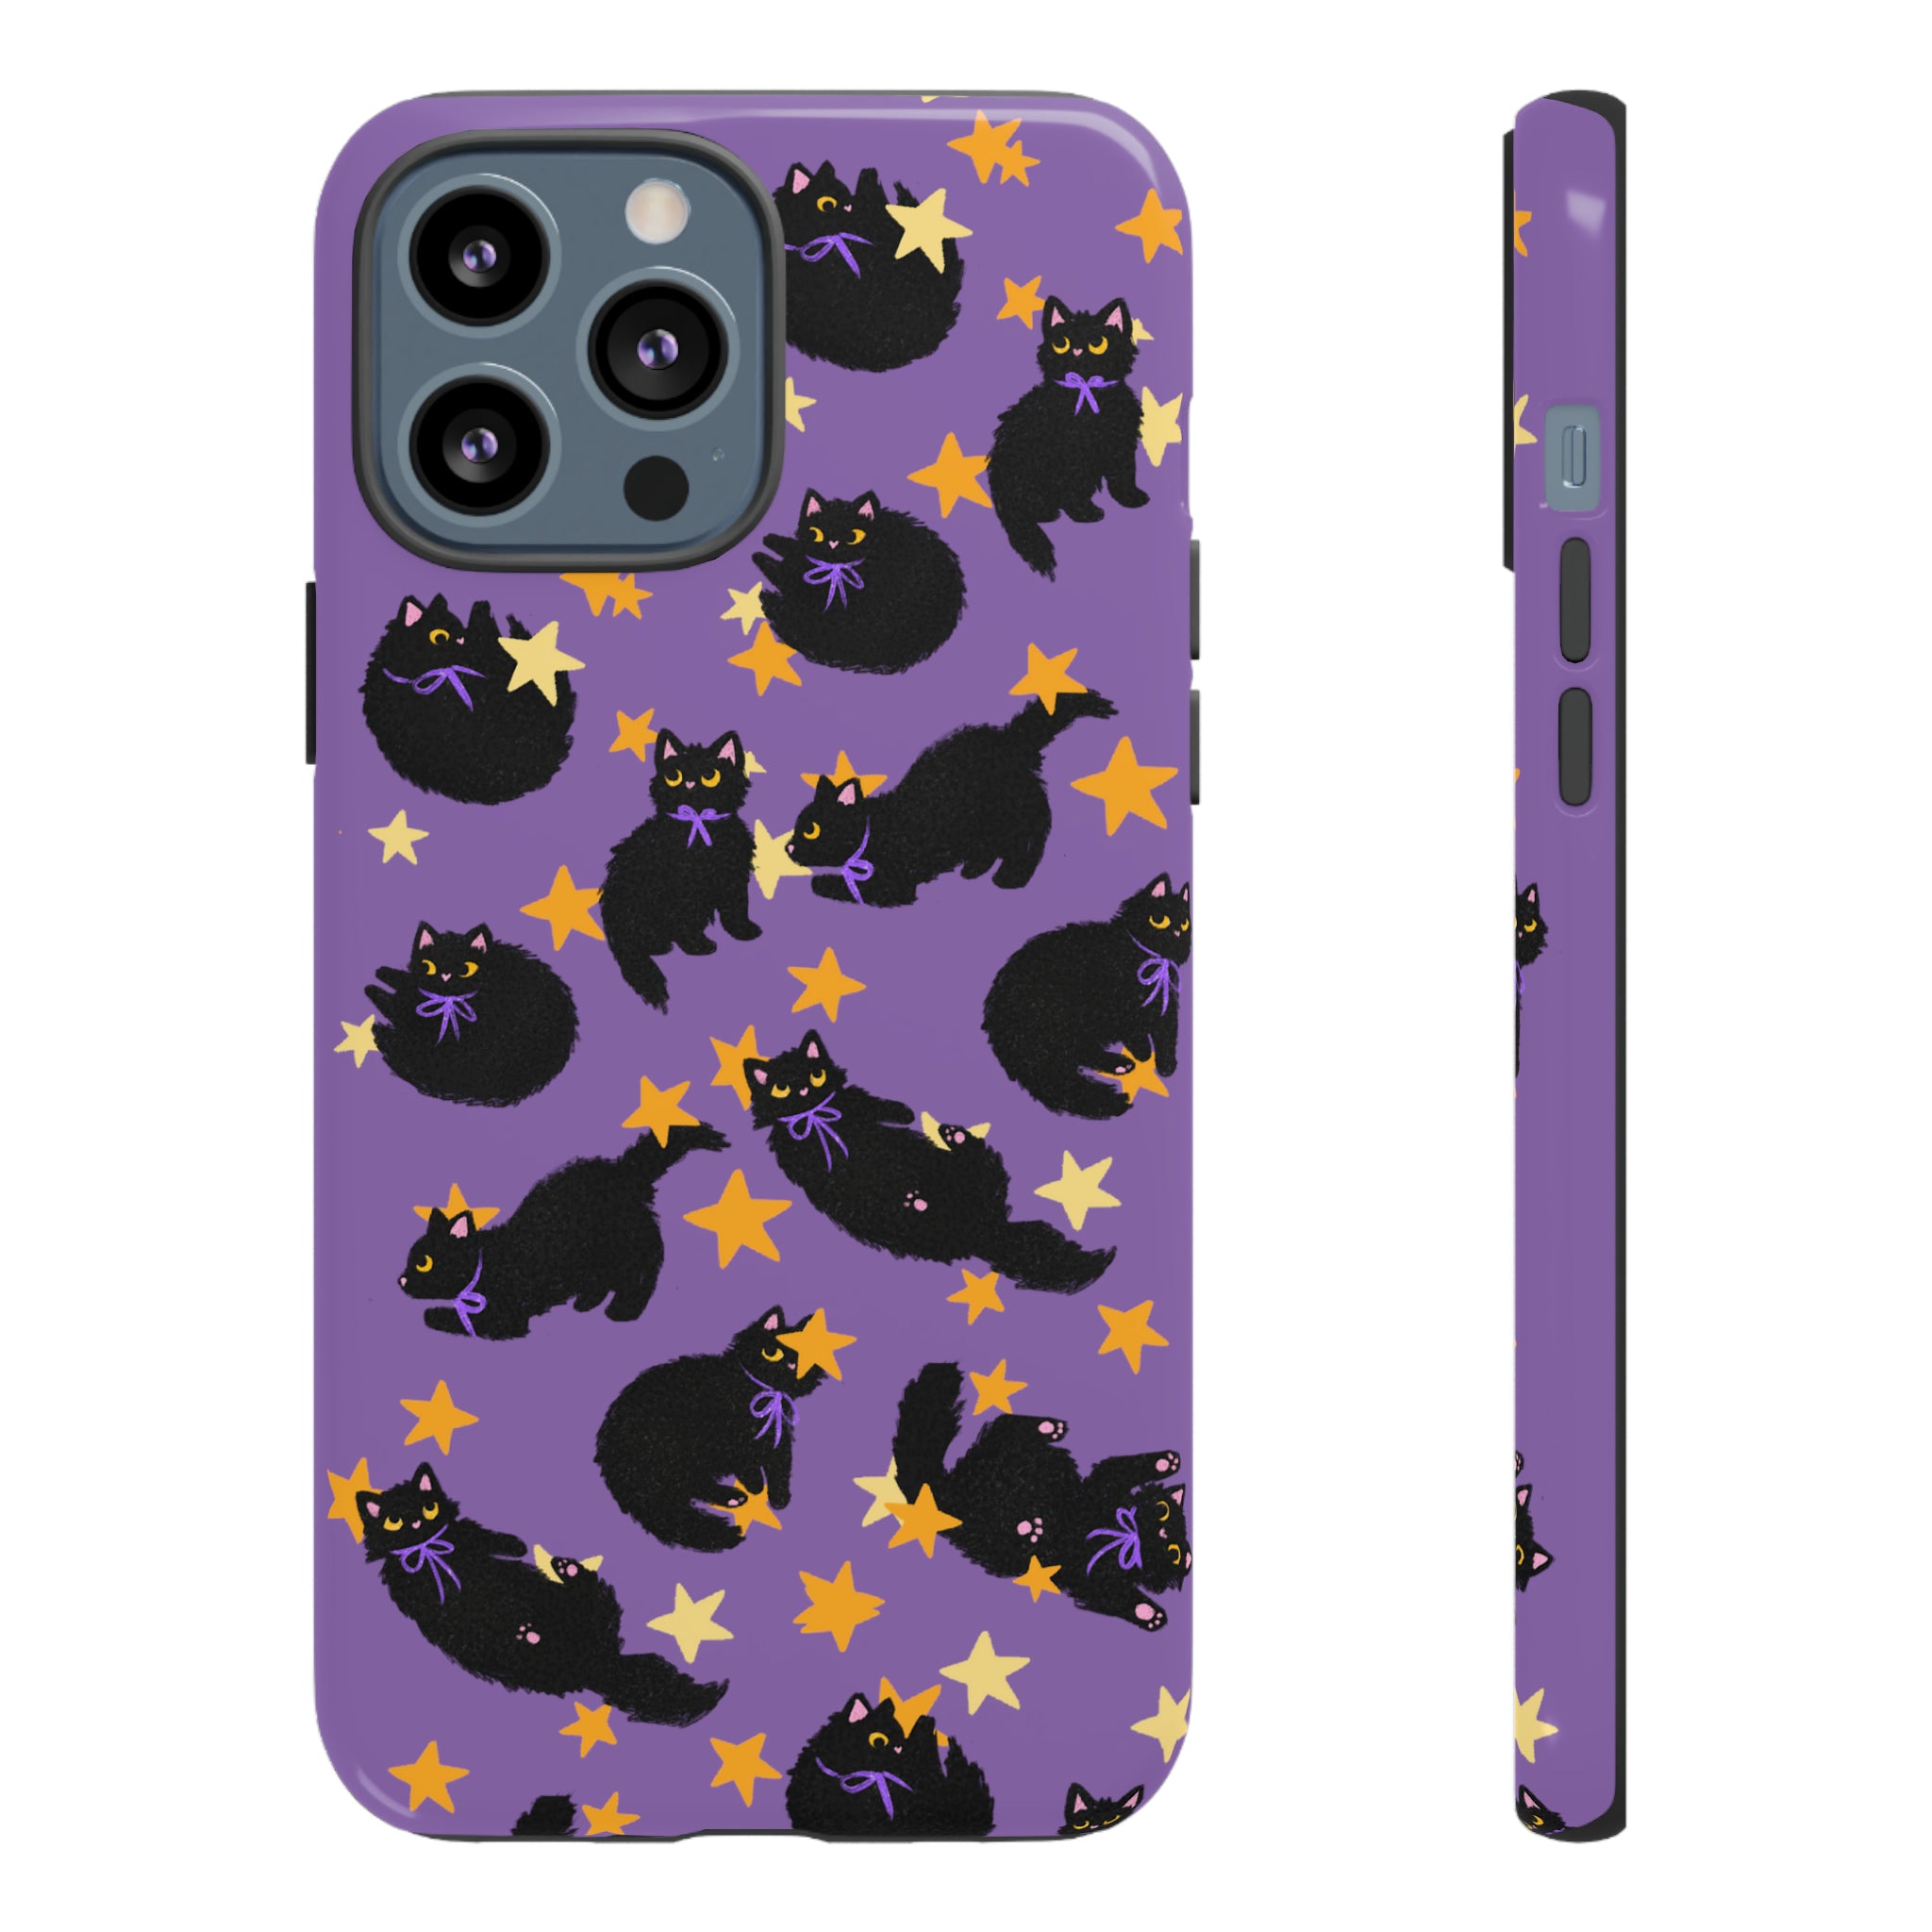 Black Kitty Phone Case